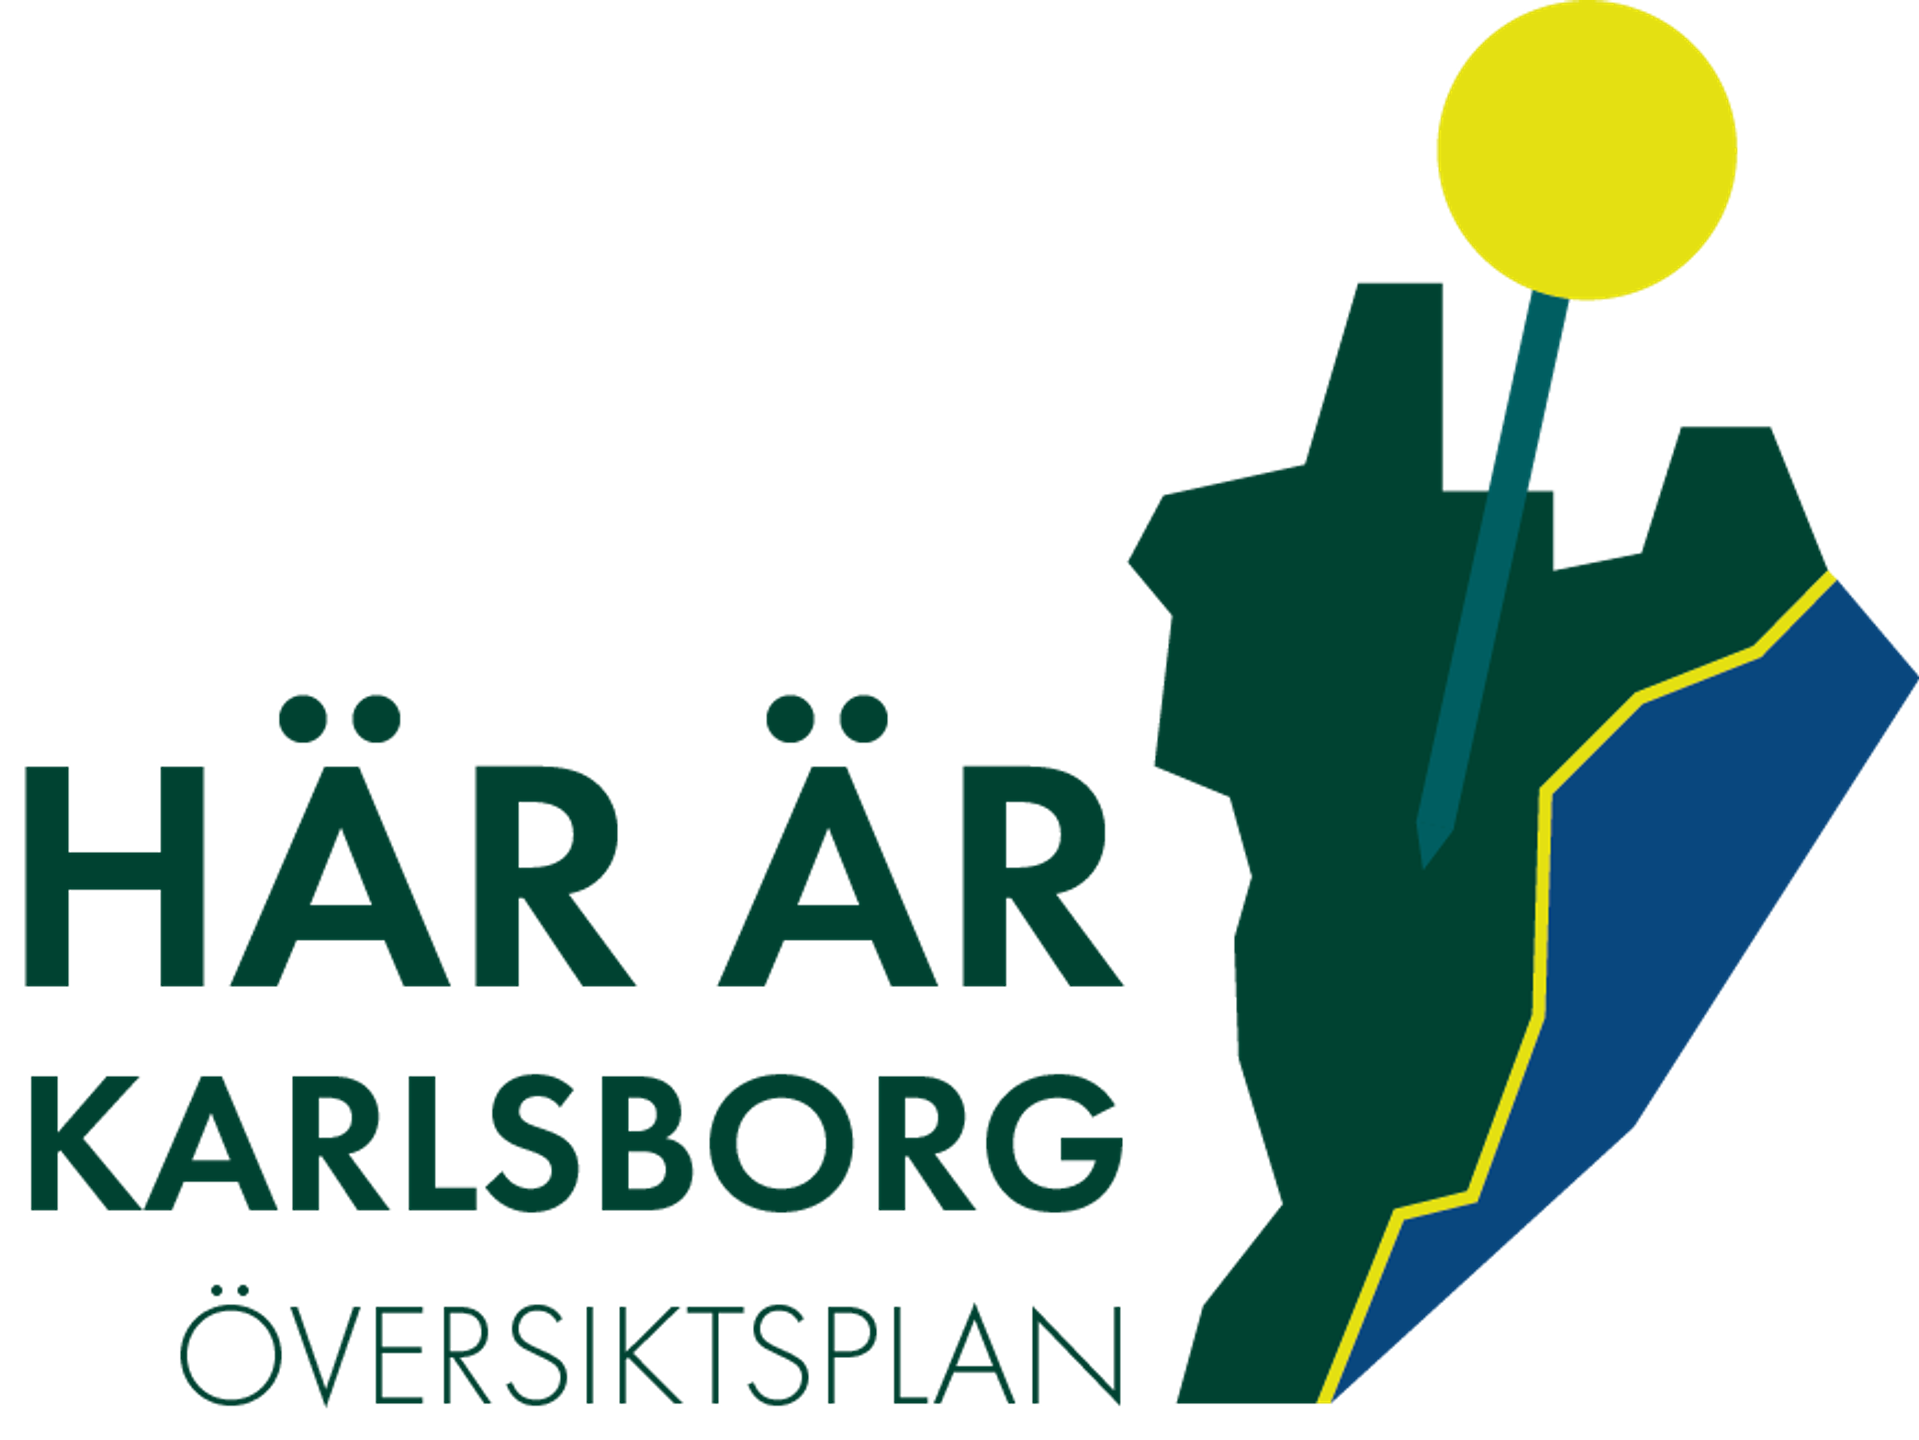 Översiktsplan Karlsborg logga